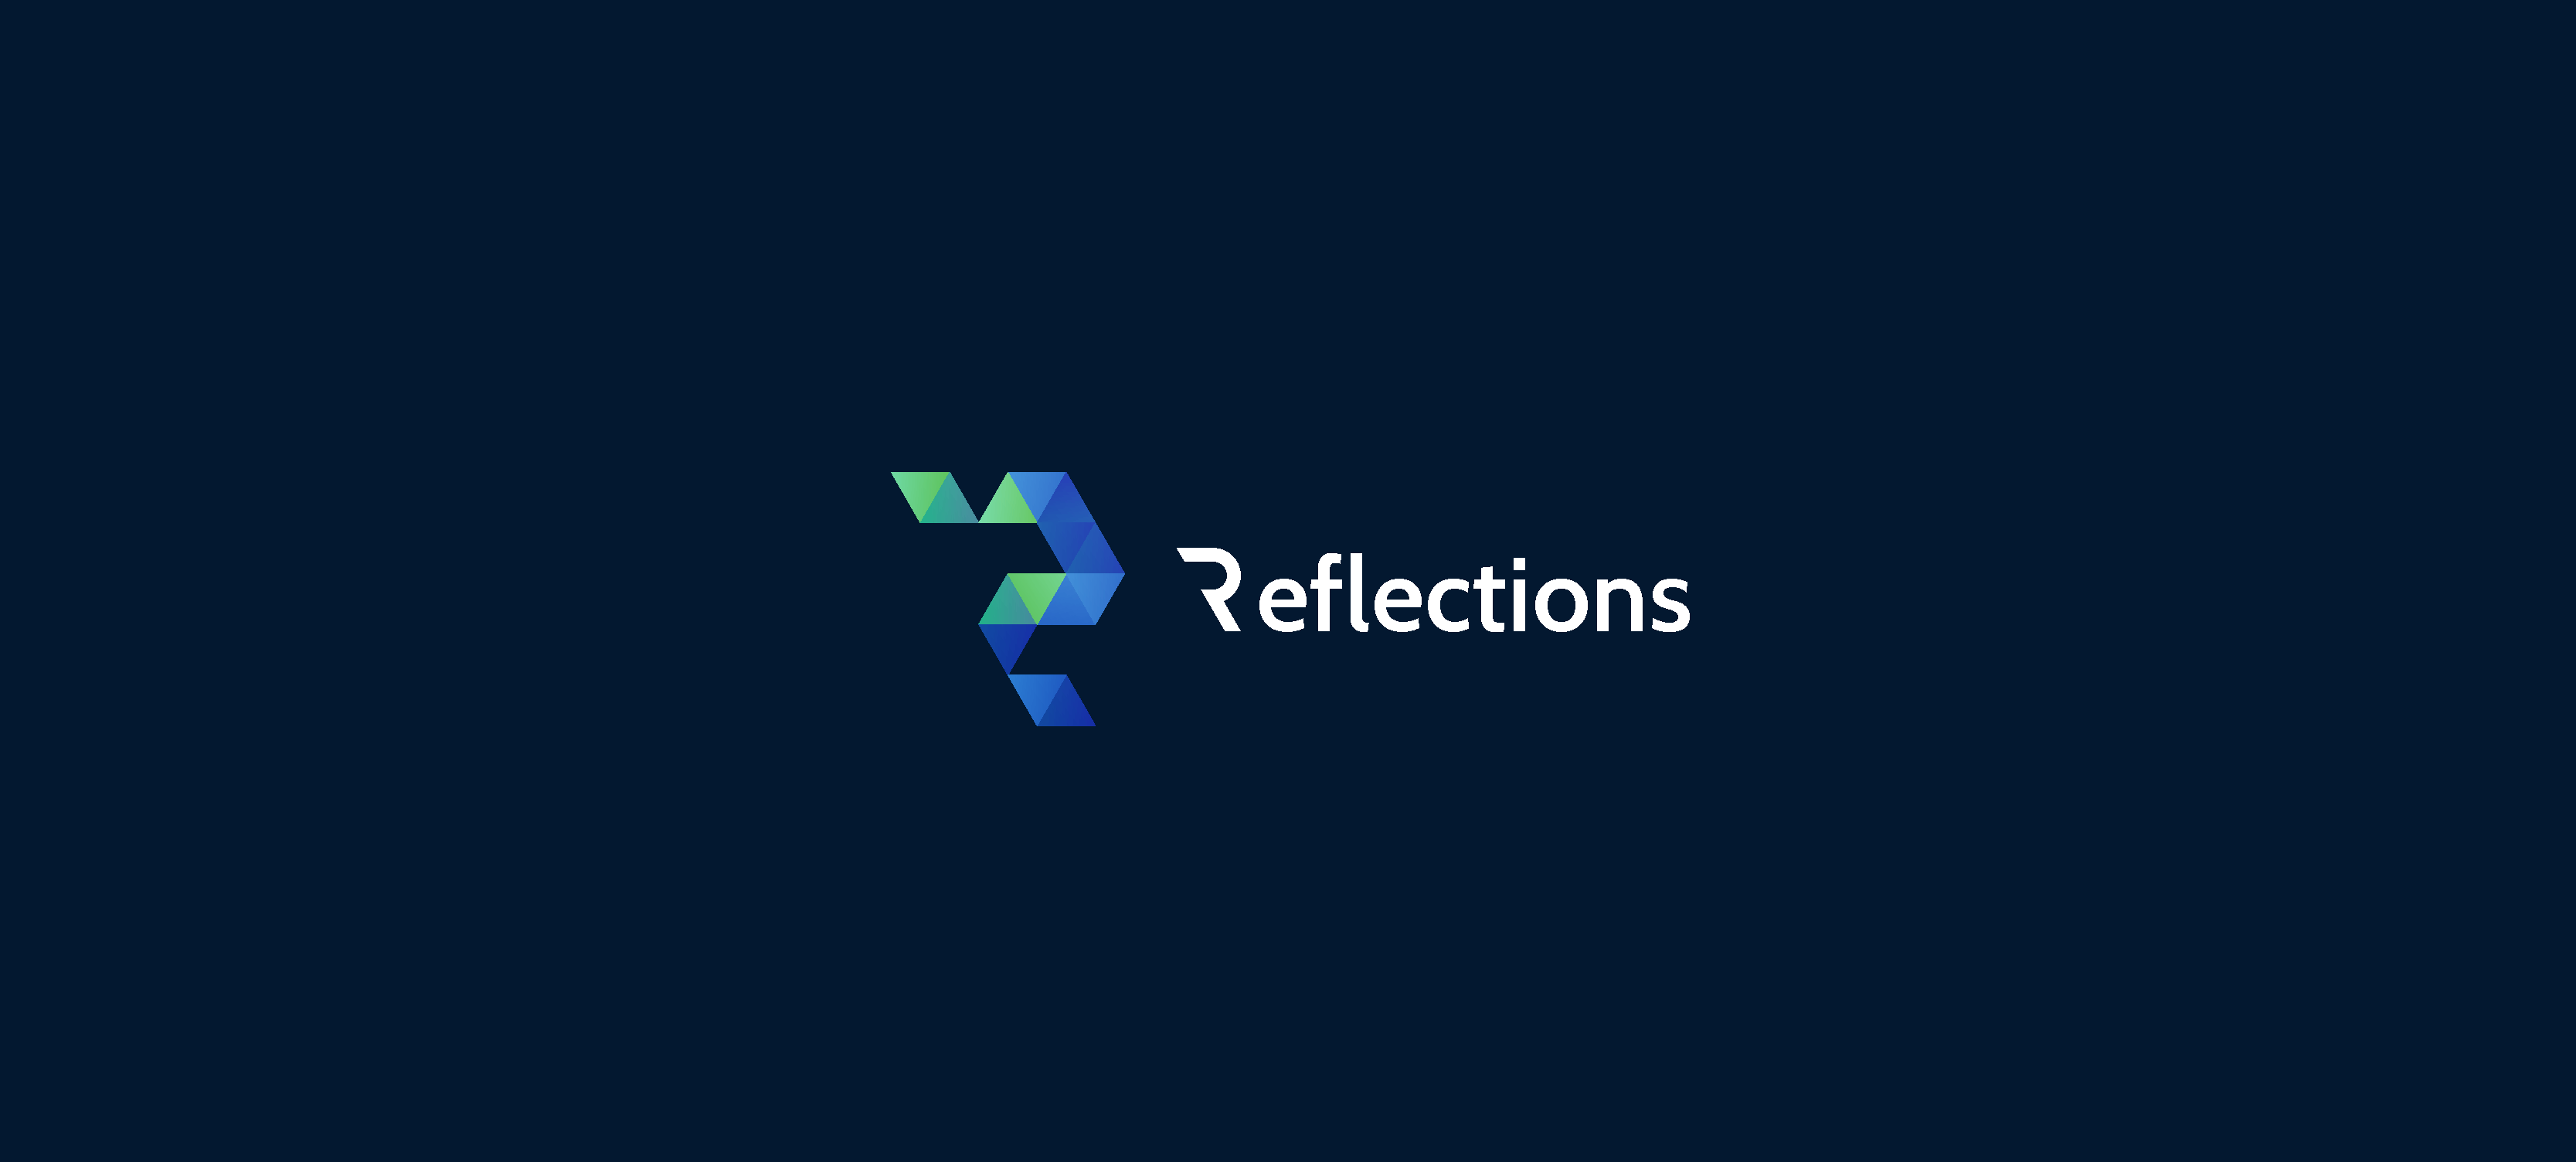 Reflections Logo - Home. Reflections Digital Media Agency